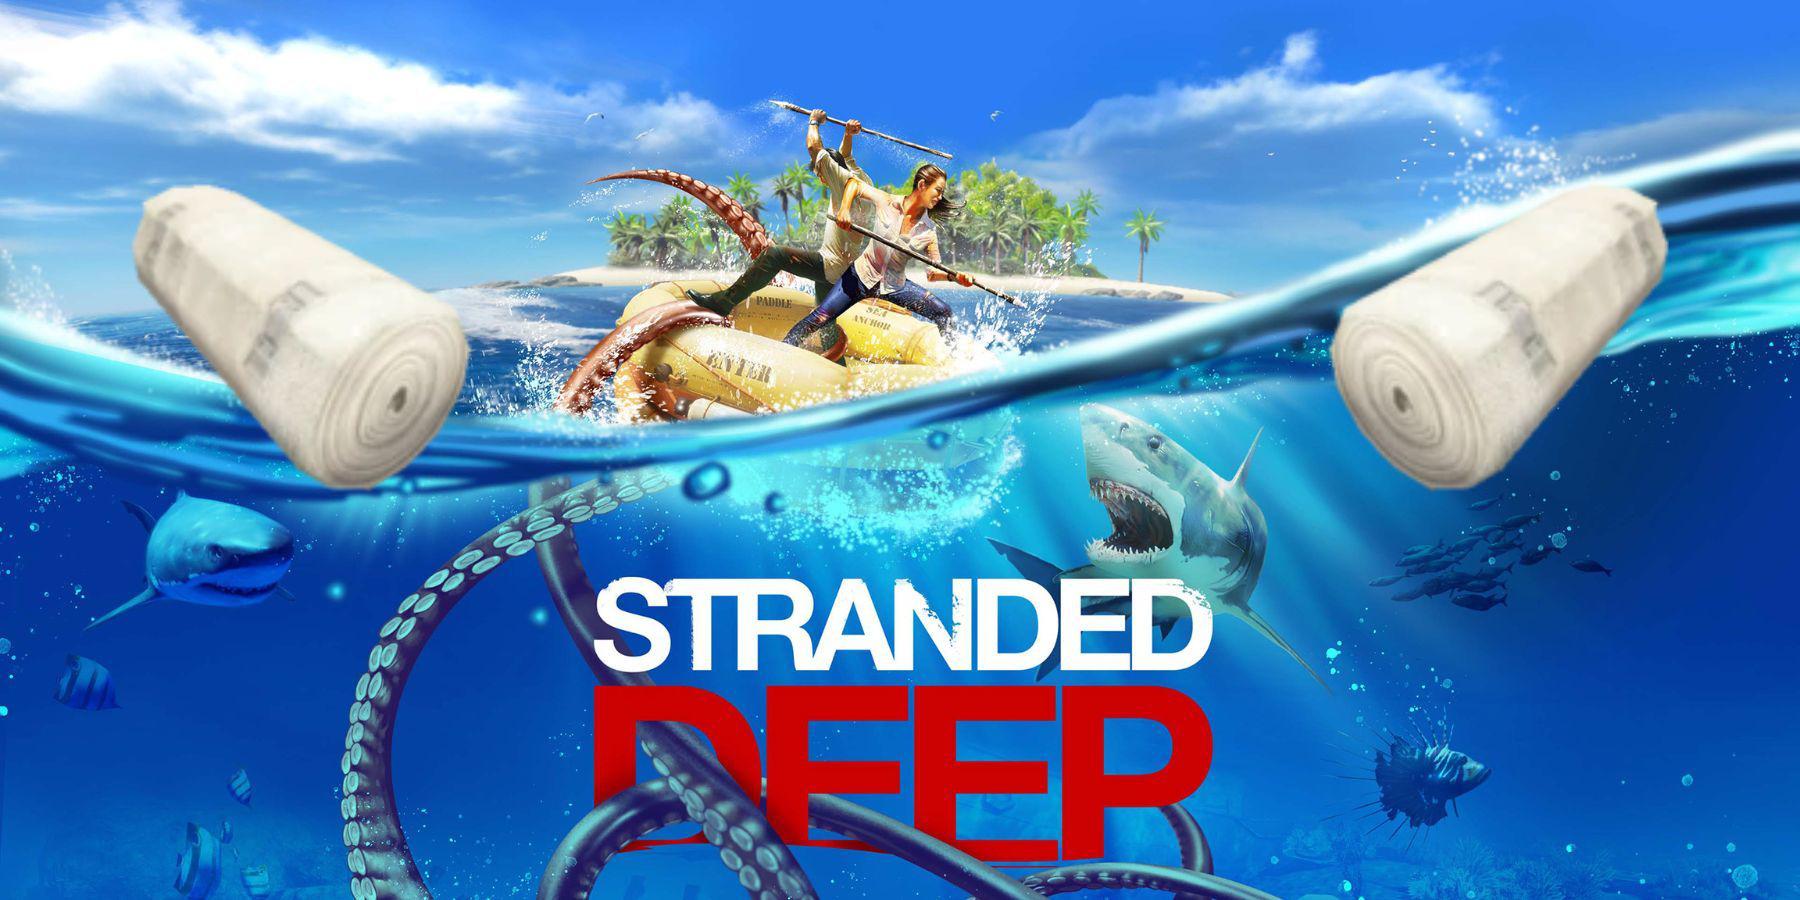 Stranded Deep: Como obter combustível